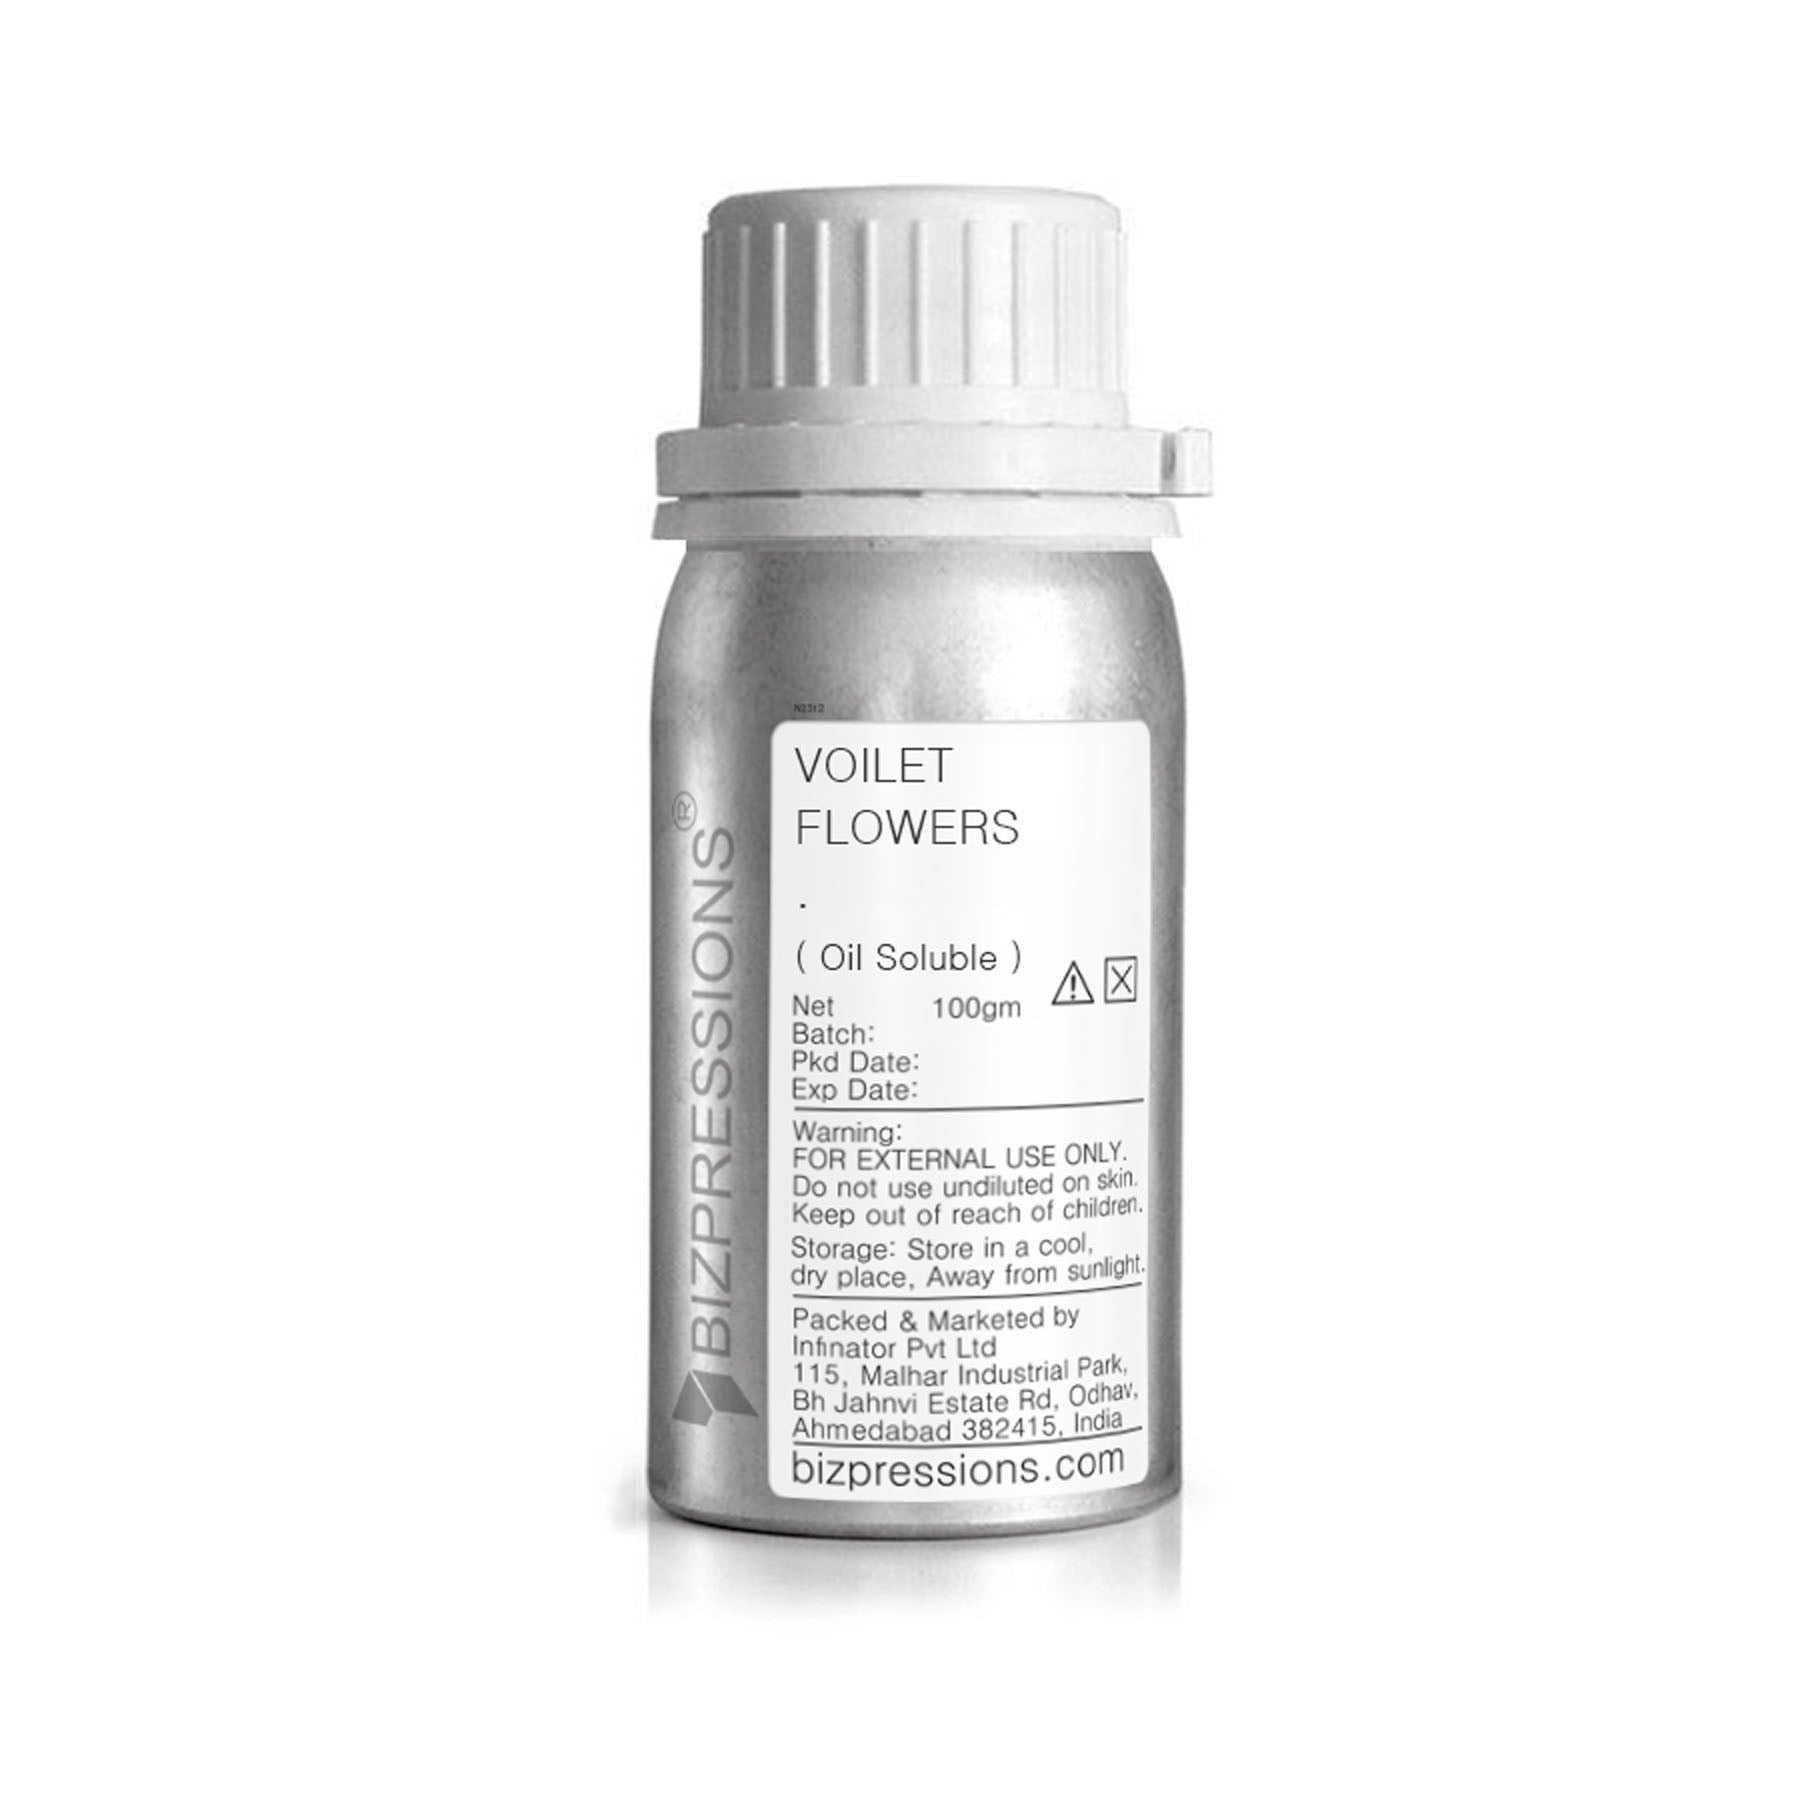 VOILET FLOWERS - Fragrance ( Oil Soluble ) - 100 gm